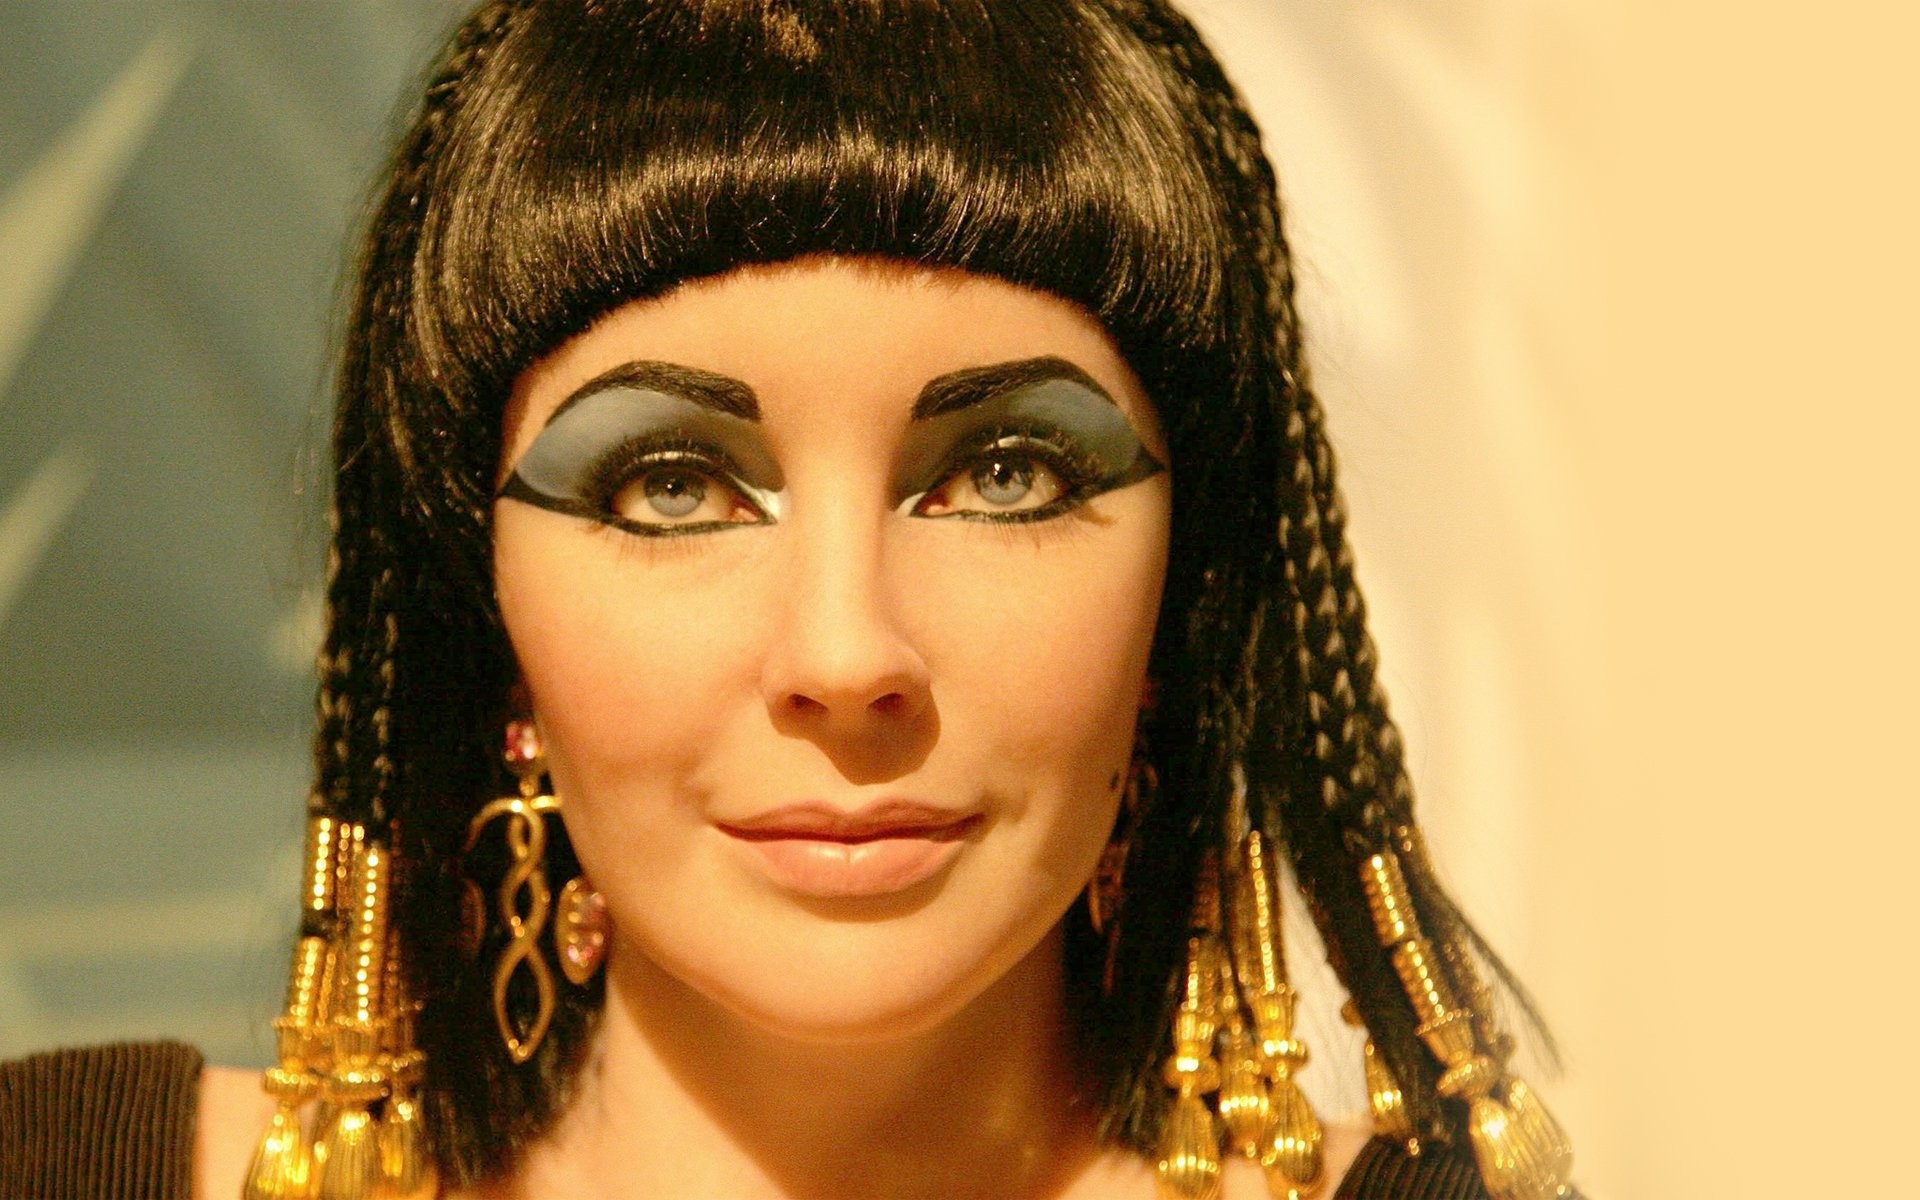 People 1920x1200 Cleopatra Elizabeth Taylor face women actress old photos film grain celebrity brunette makeup braids jewelry portrait